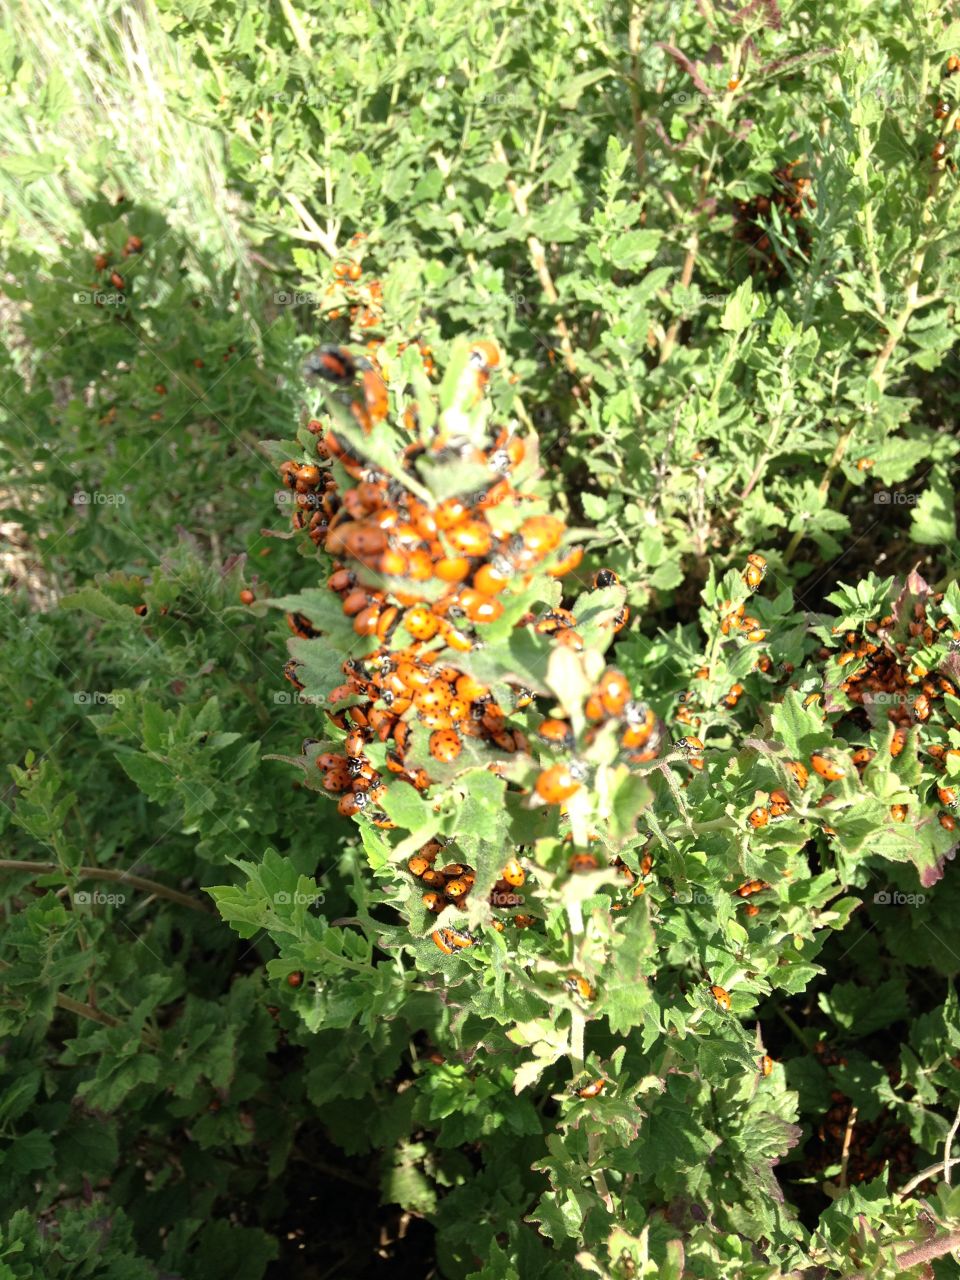 Ladybug swarm on Mt. Livermore